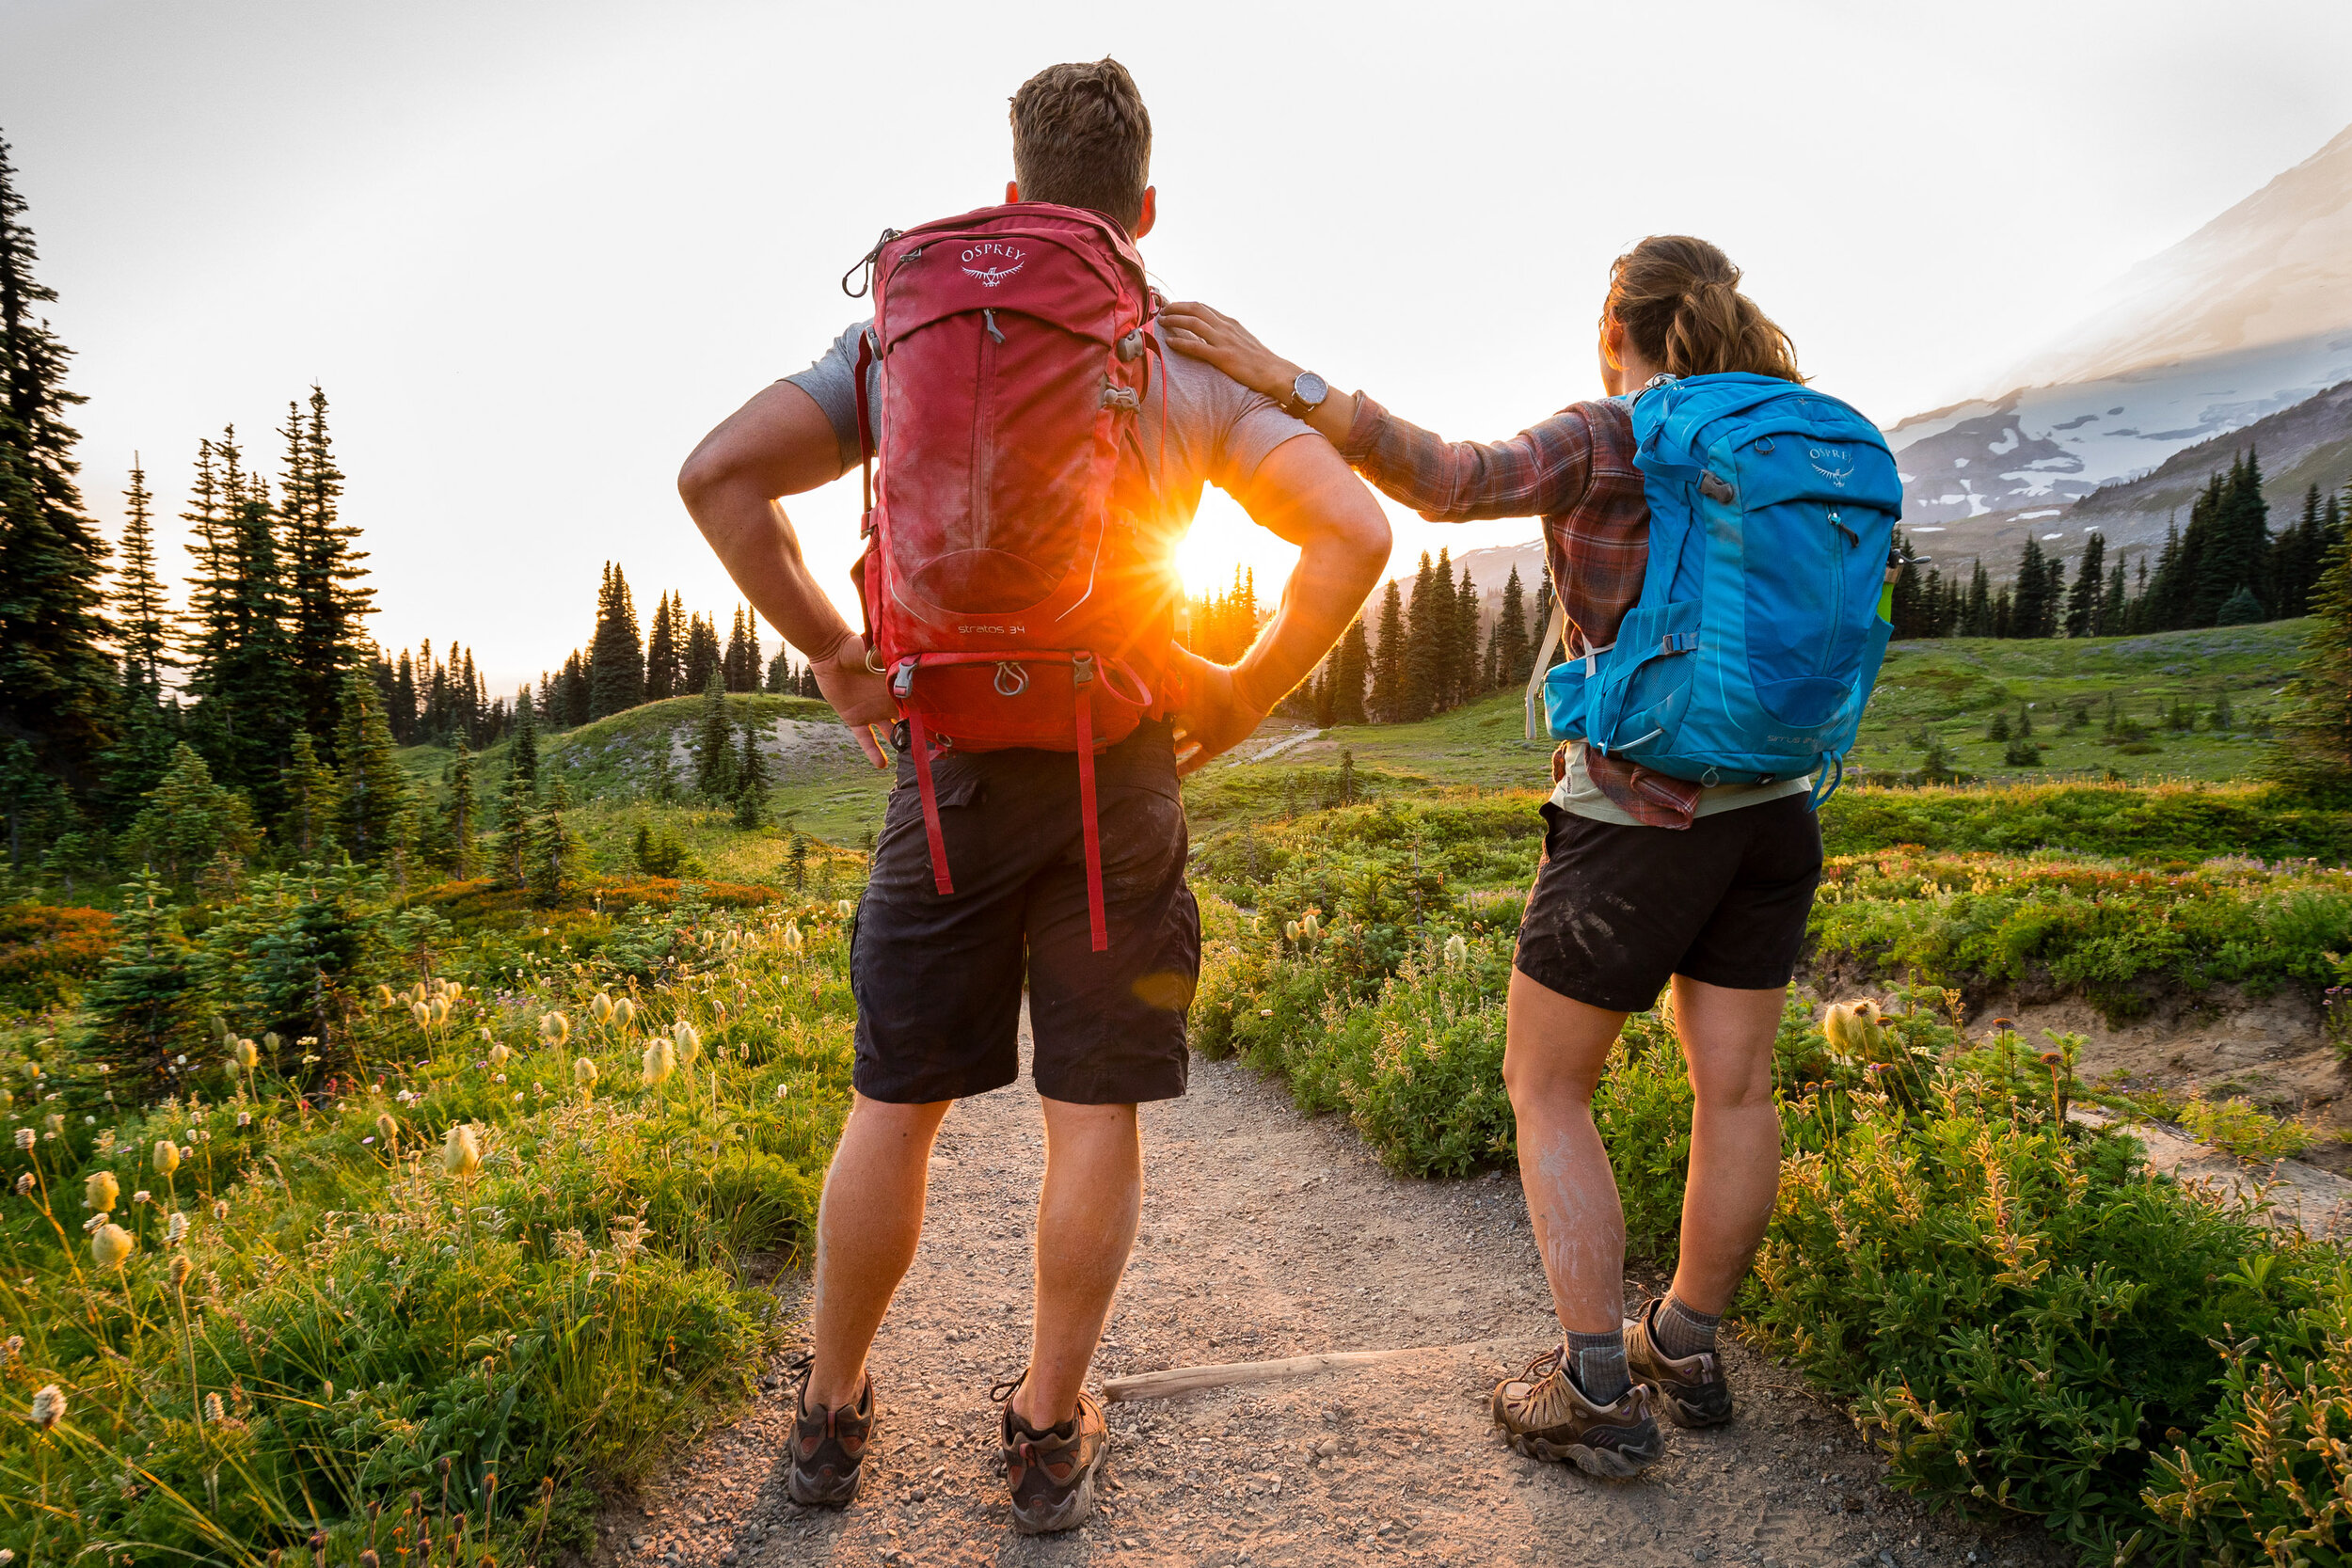  Adventure: Michael Hildebrand and Holly Johnson take a break to enjoy the sunset while hiking in Mount Rainier National Park, Washington 